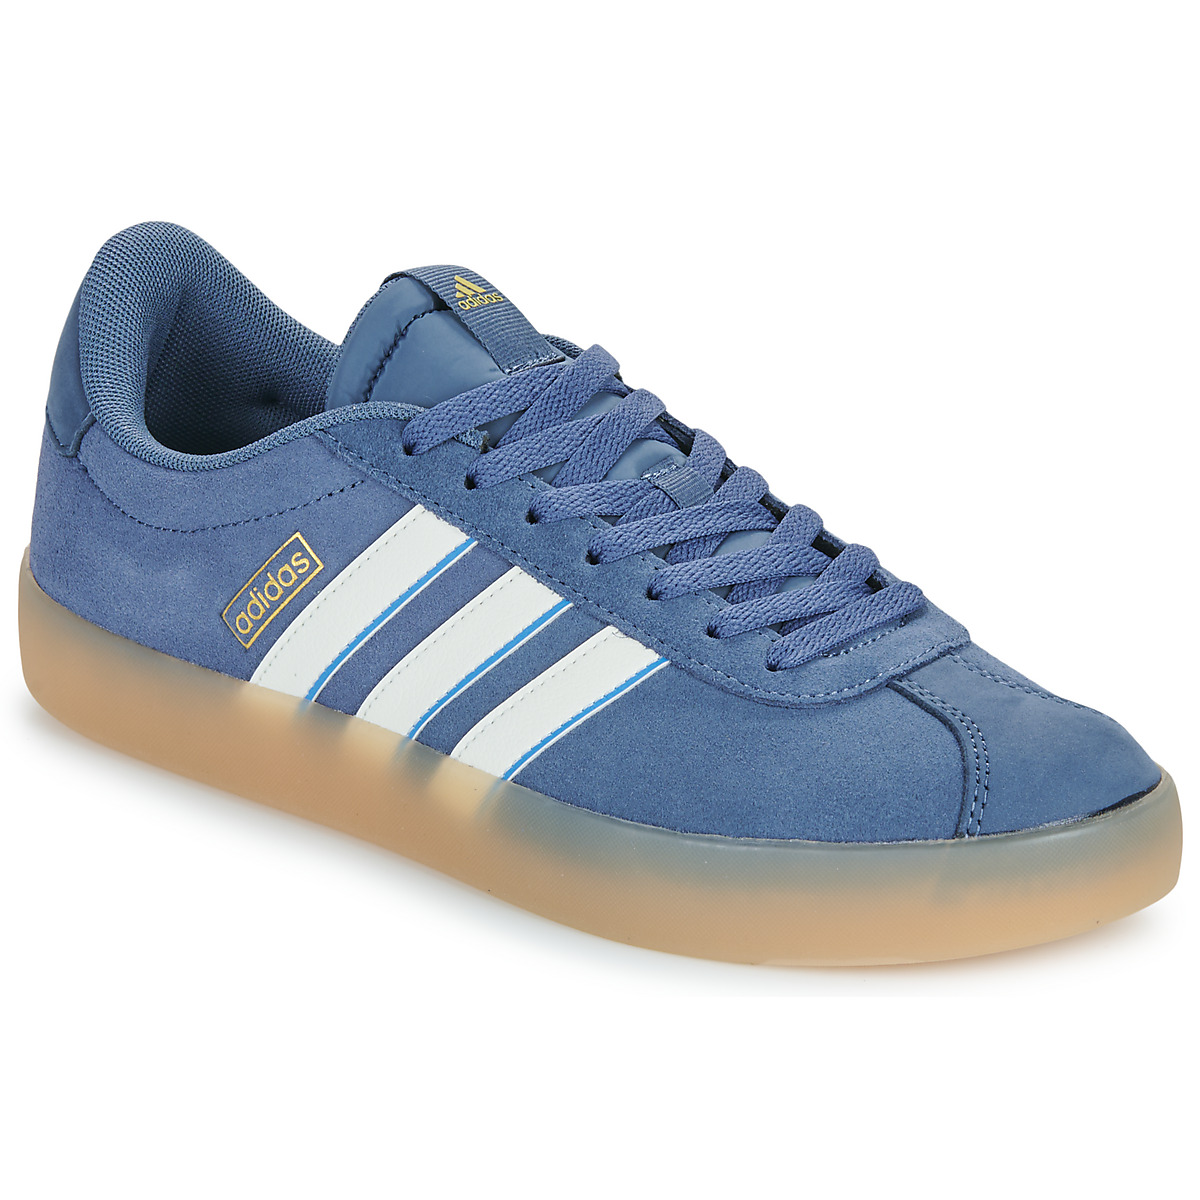 Adidas Vl Court 3.0 Blue